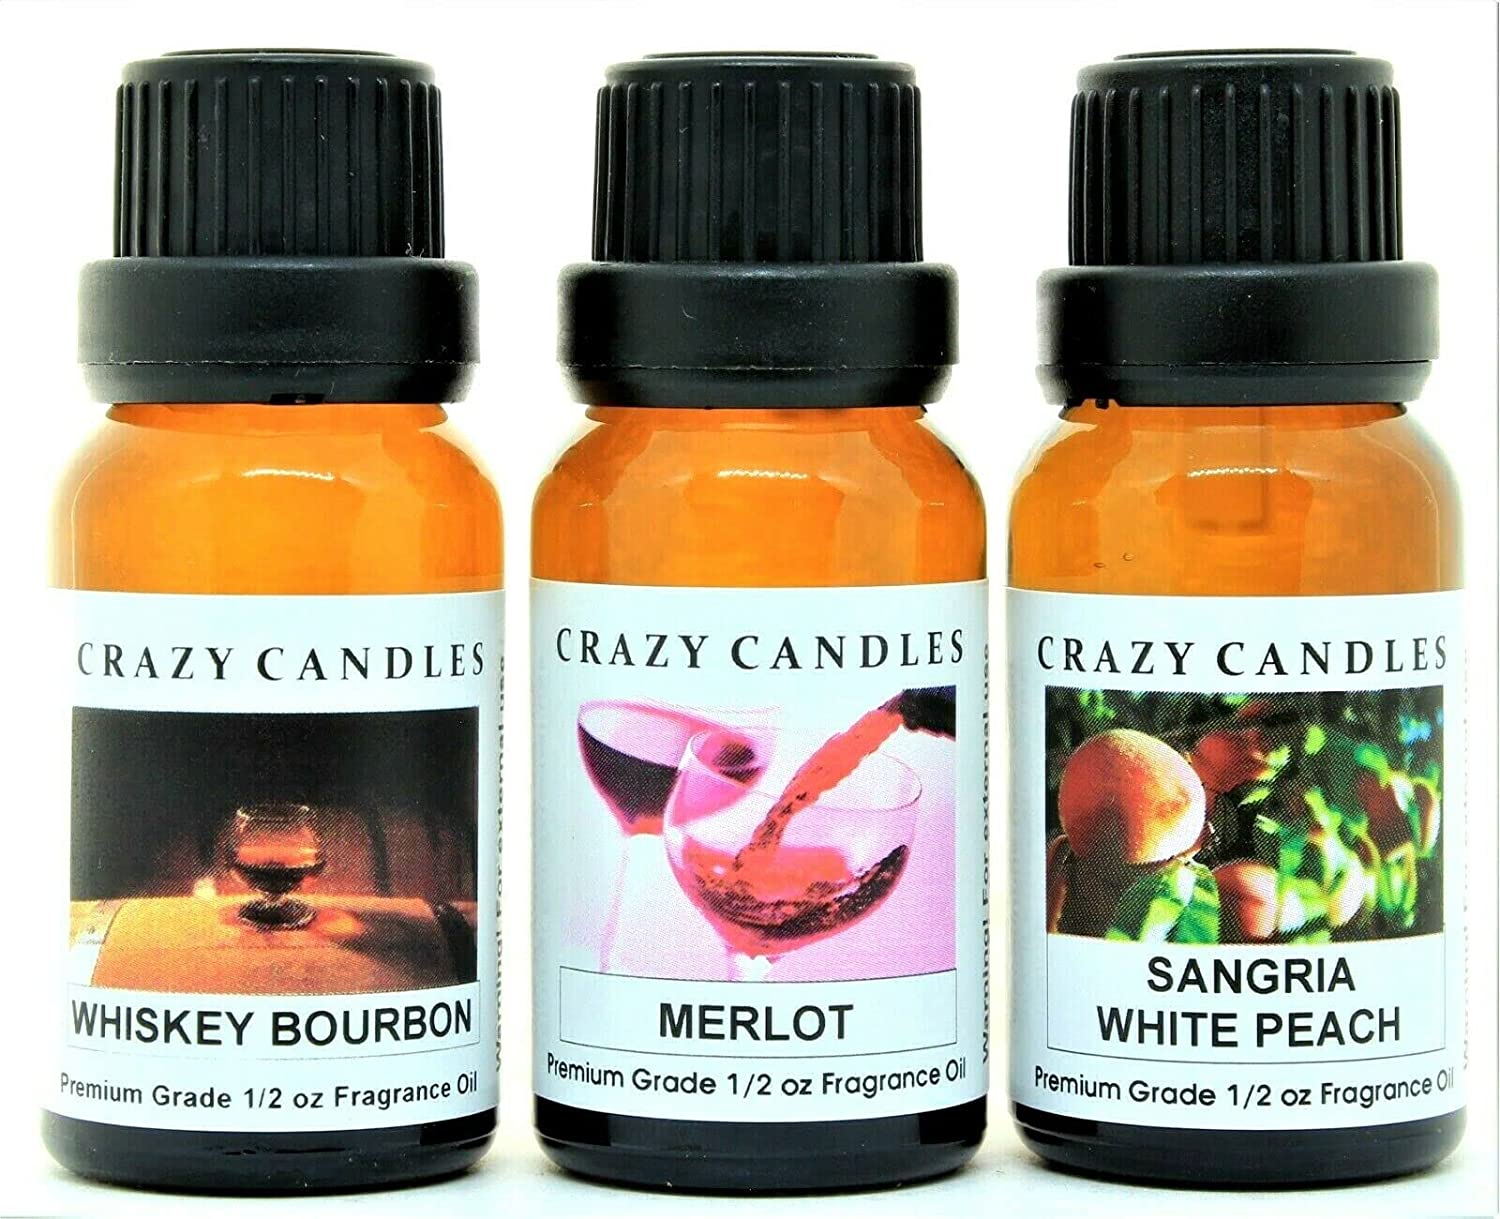 Crazy Candles 3 Bottle Set: Whiskey Bourbon, Merlot, Sangria White Peach  1/2 Fl Oz Each (15ml) Premium Grade Scented Fragrance Oil Made in USA 